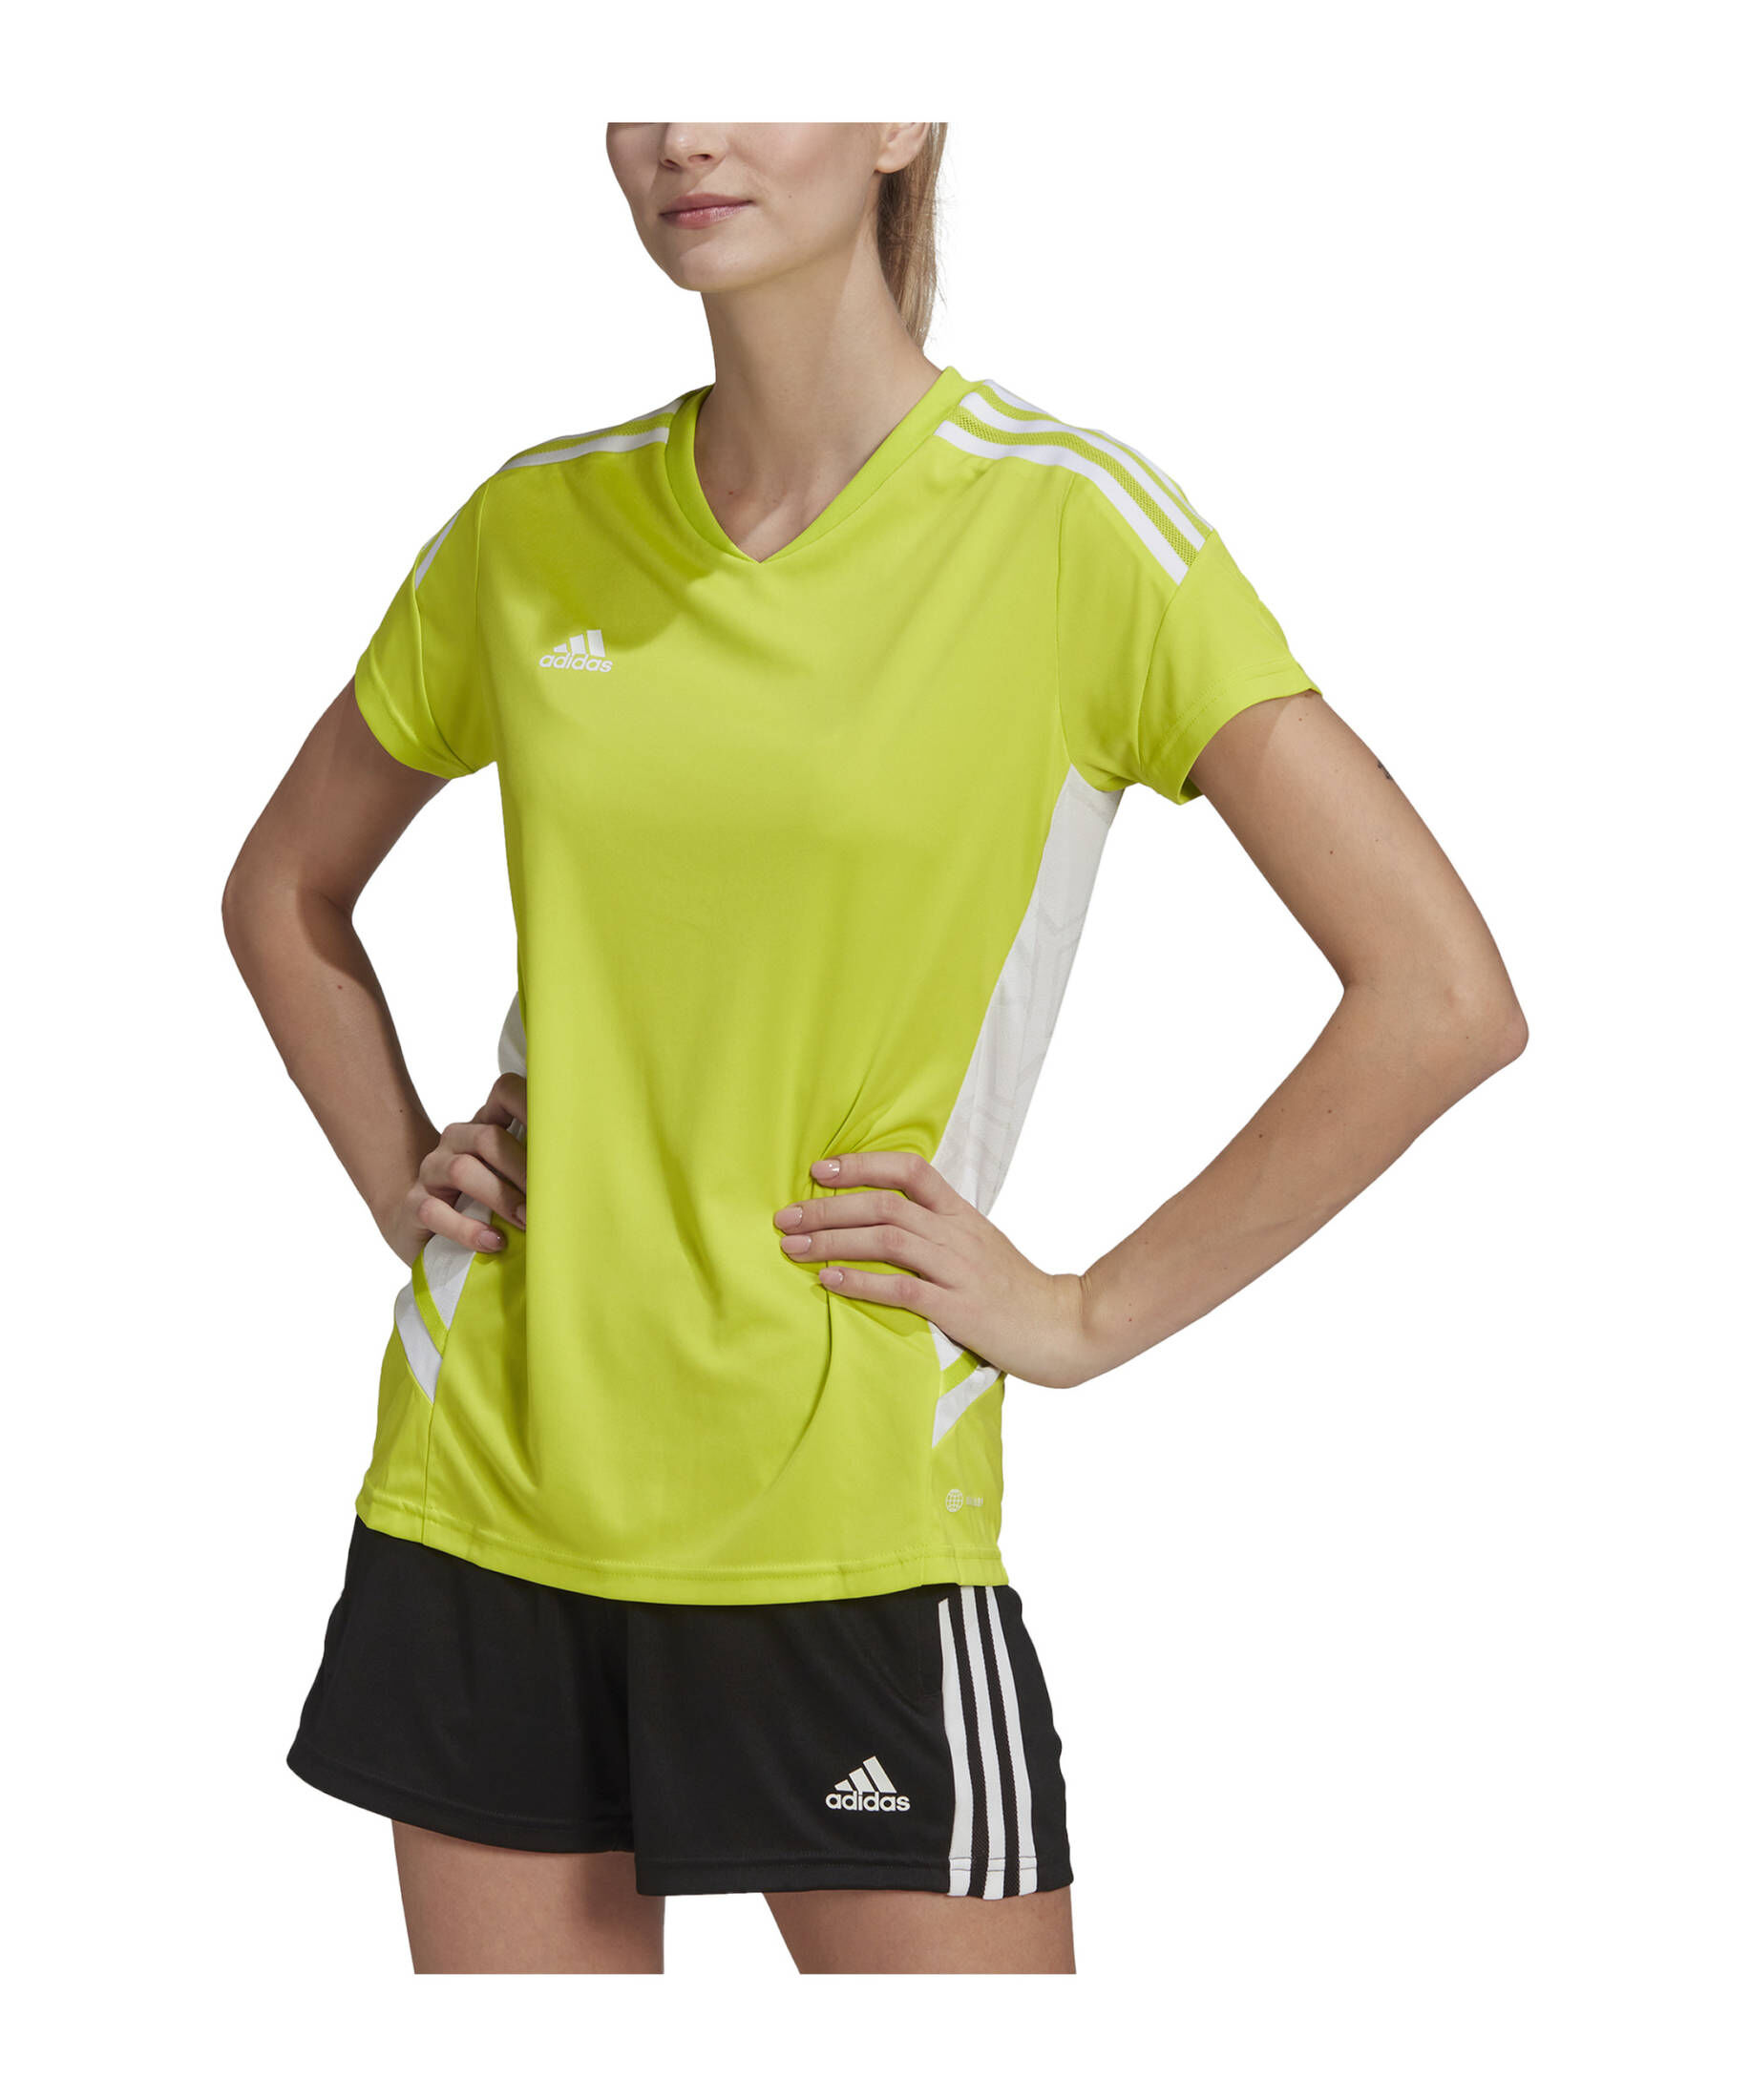 kaufen | Damen Condivo - Trikot - Teamsport engelhorn Performance Fußball Damen 22 Textil Trikots adidas